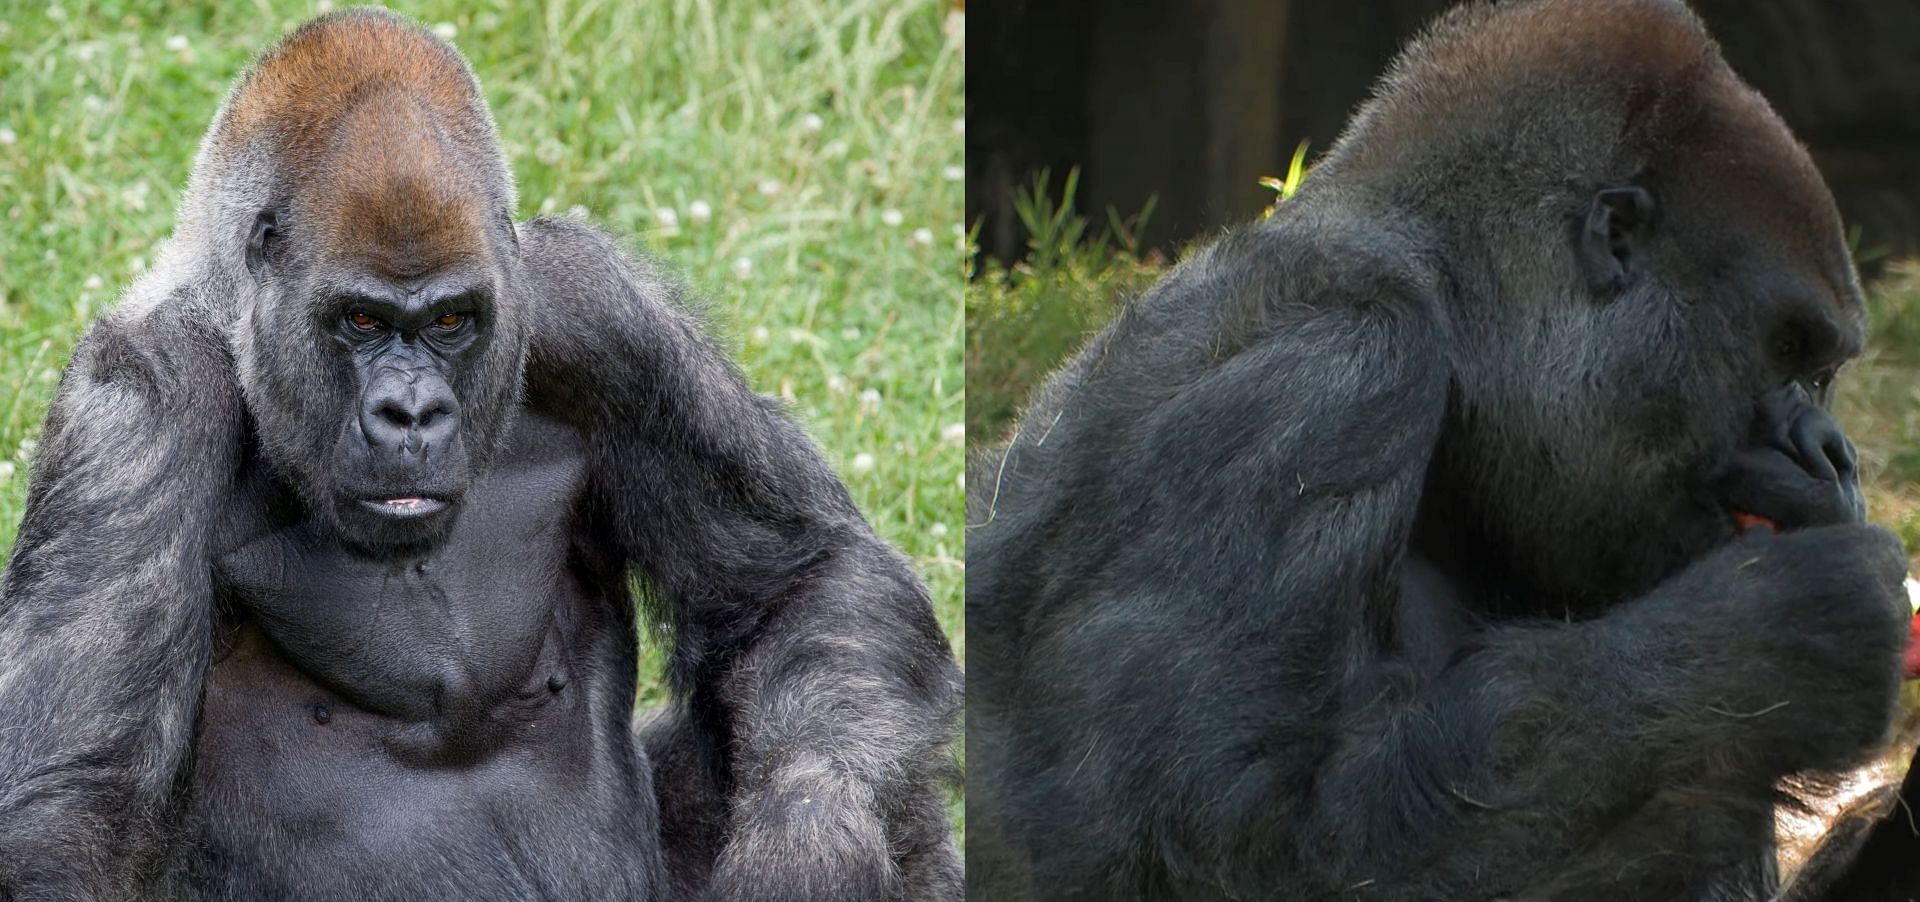 Ozzie, the gorilla (Image via Zoo Atlanta)